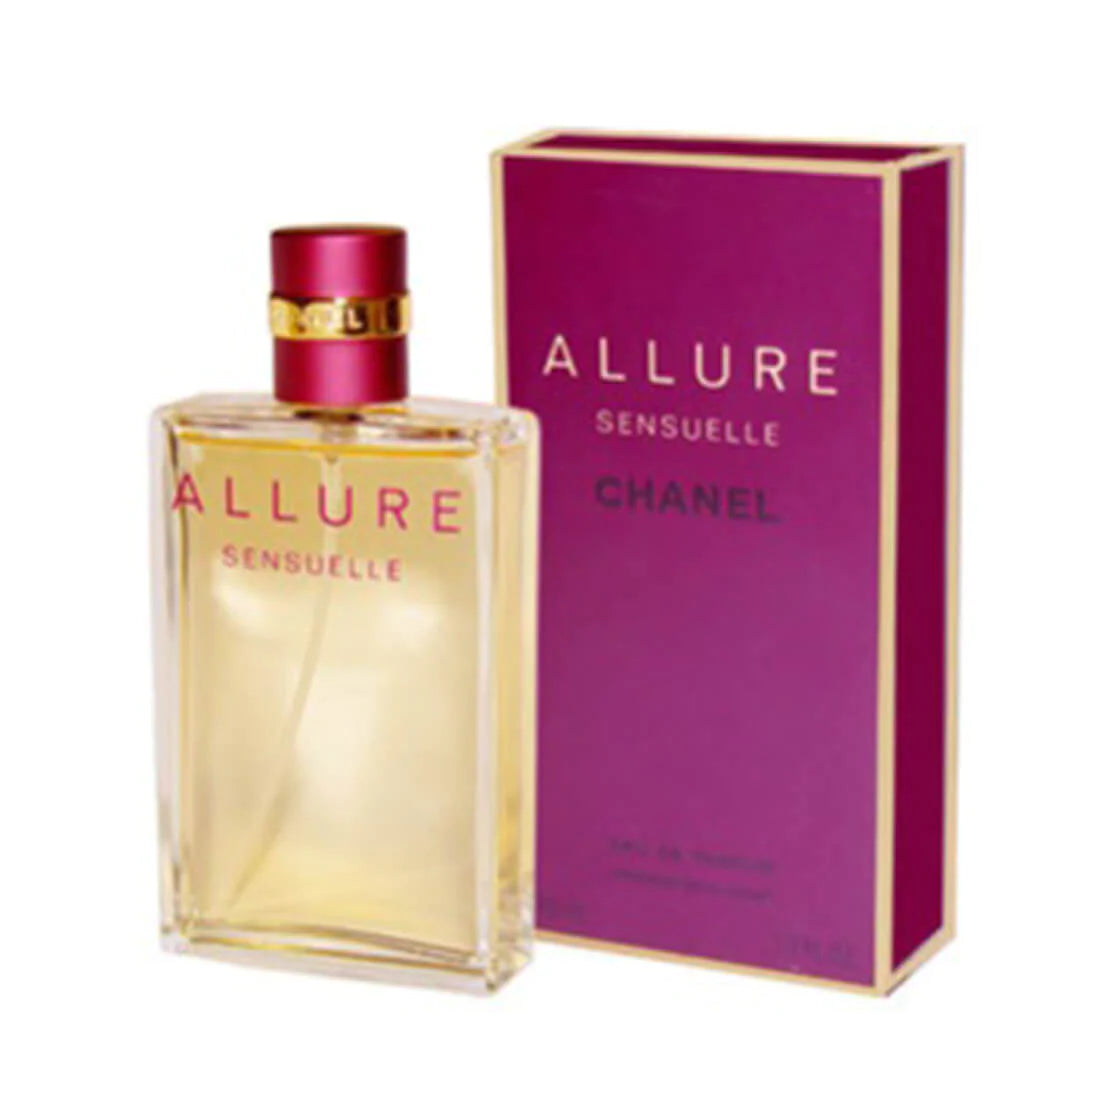 Allure Sensuelle Parfum Chanel perfume - a fragrance for women 2006